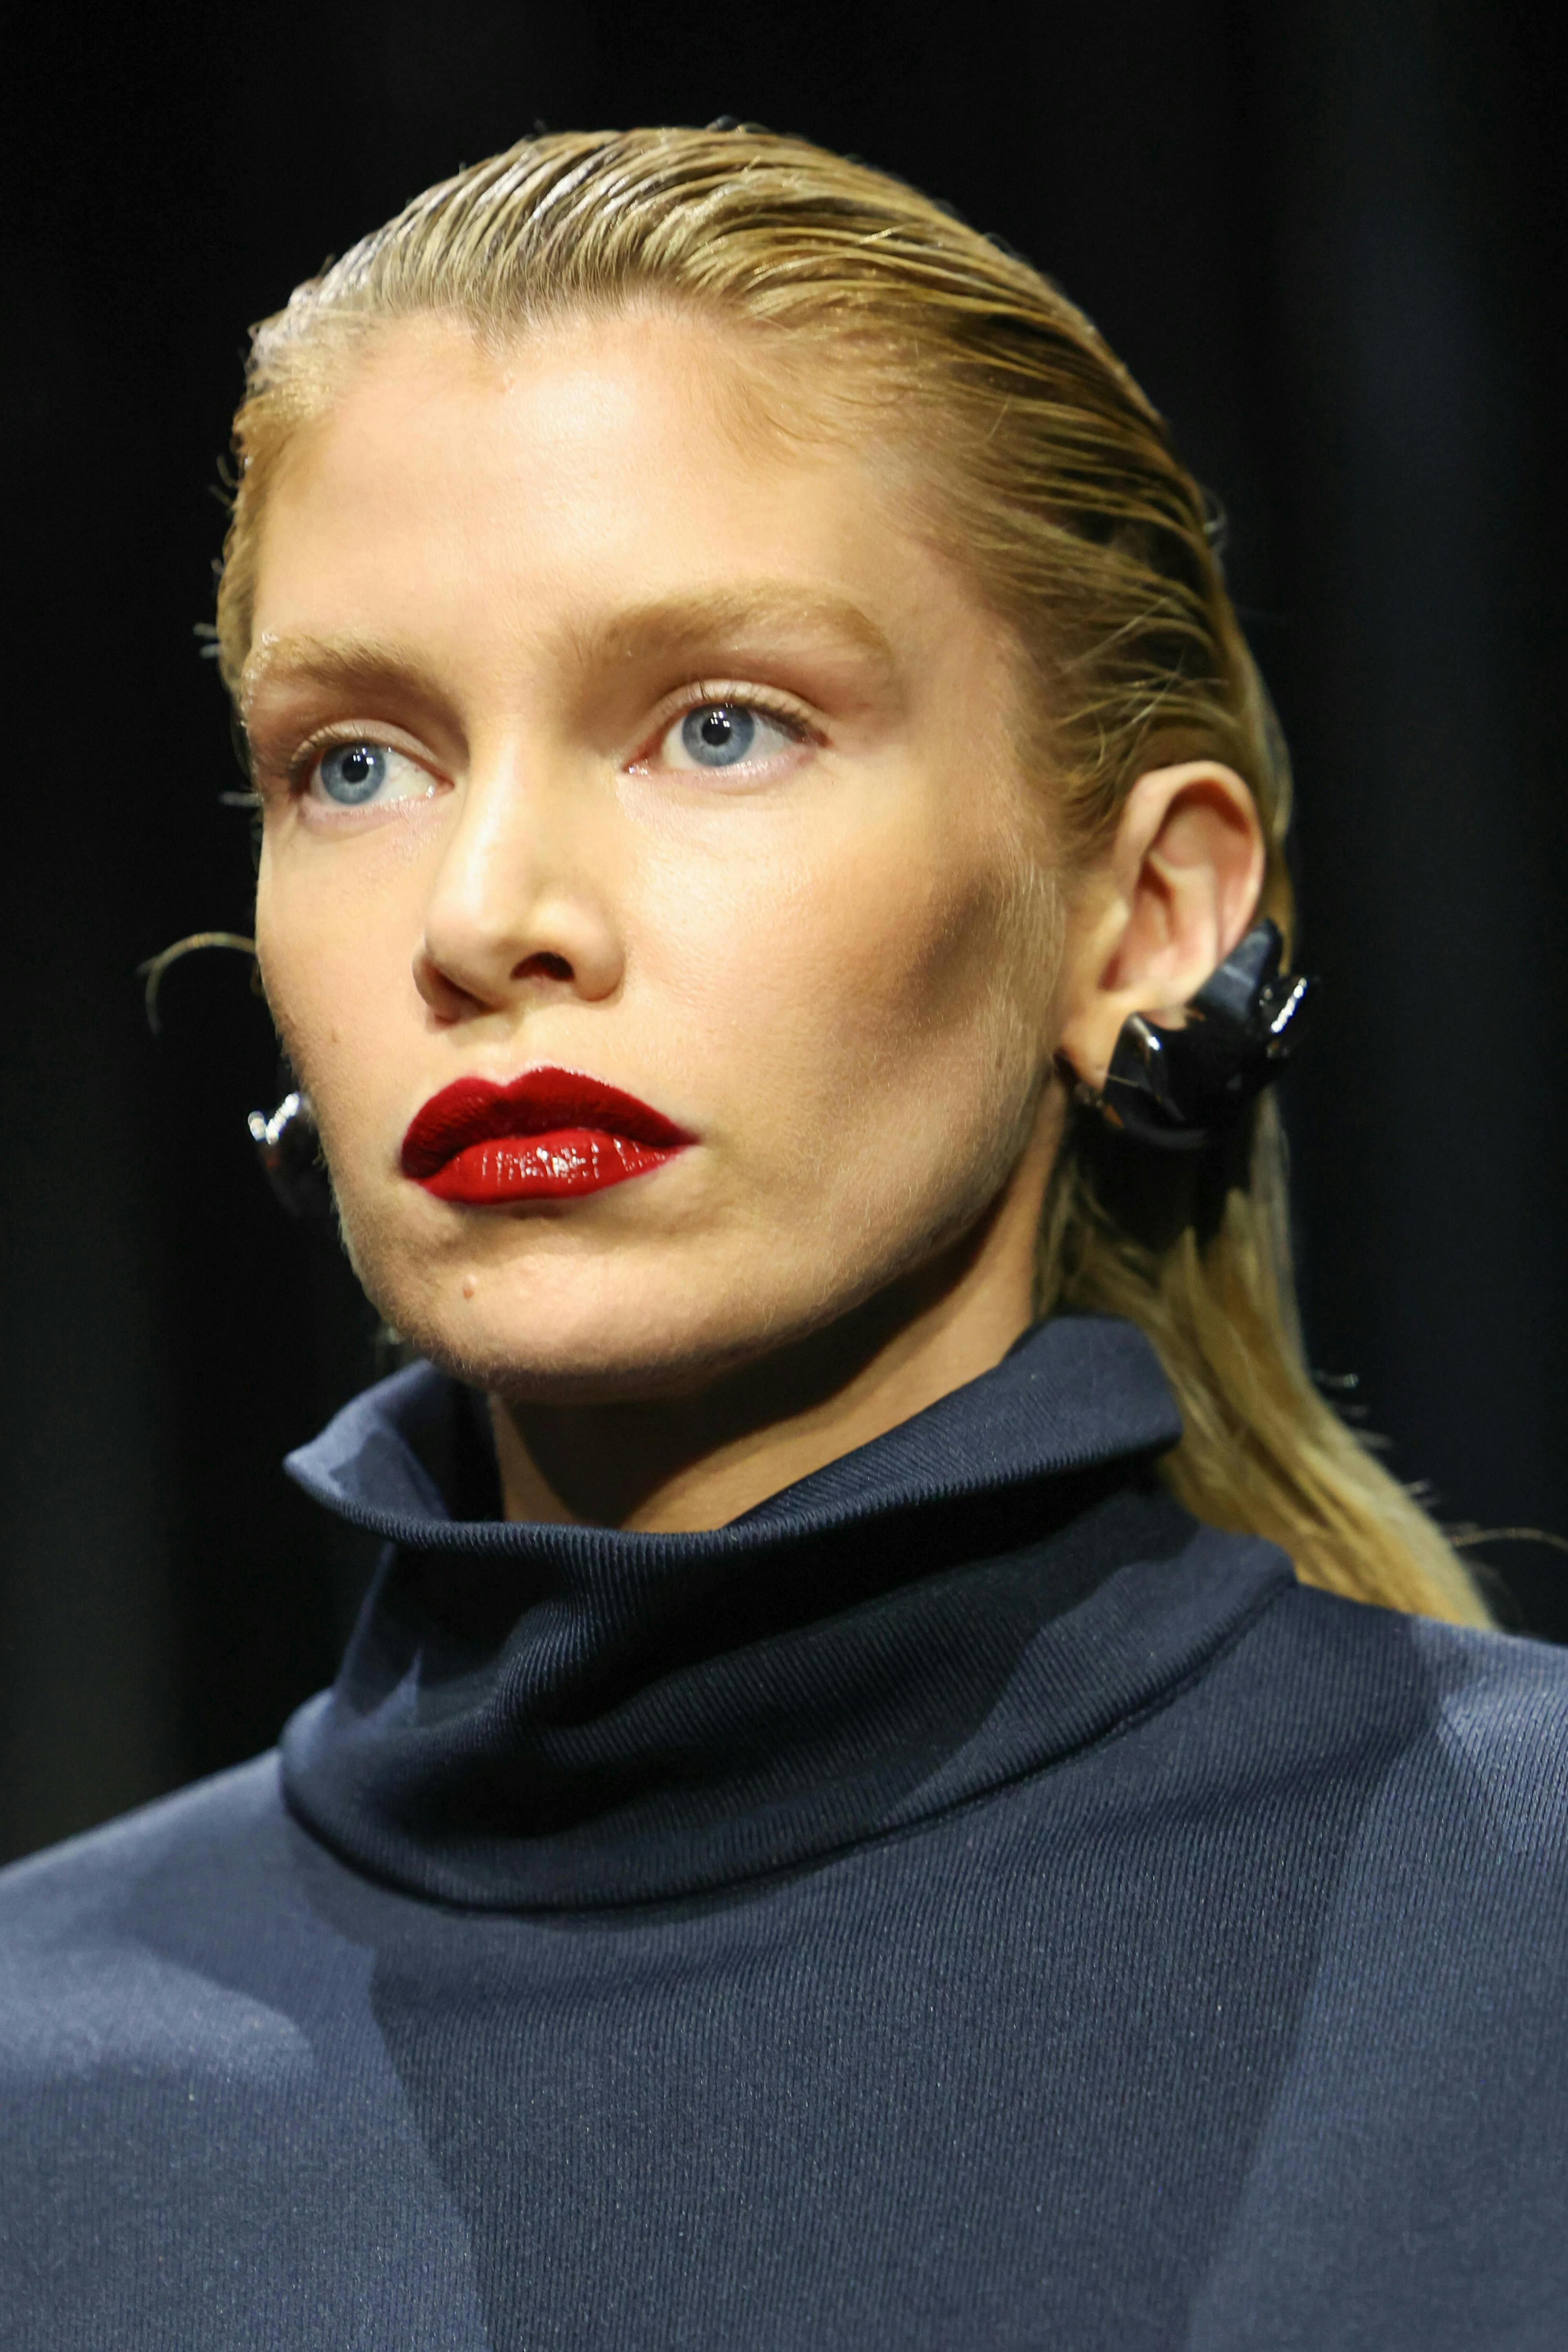 bestof topix milan face head person photography portrait cosmetics lipstick earring jewelry blonde